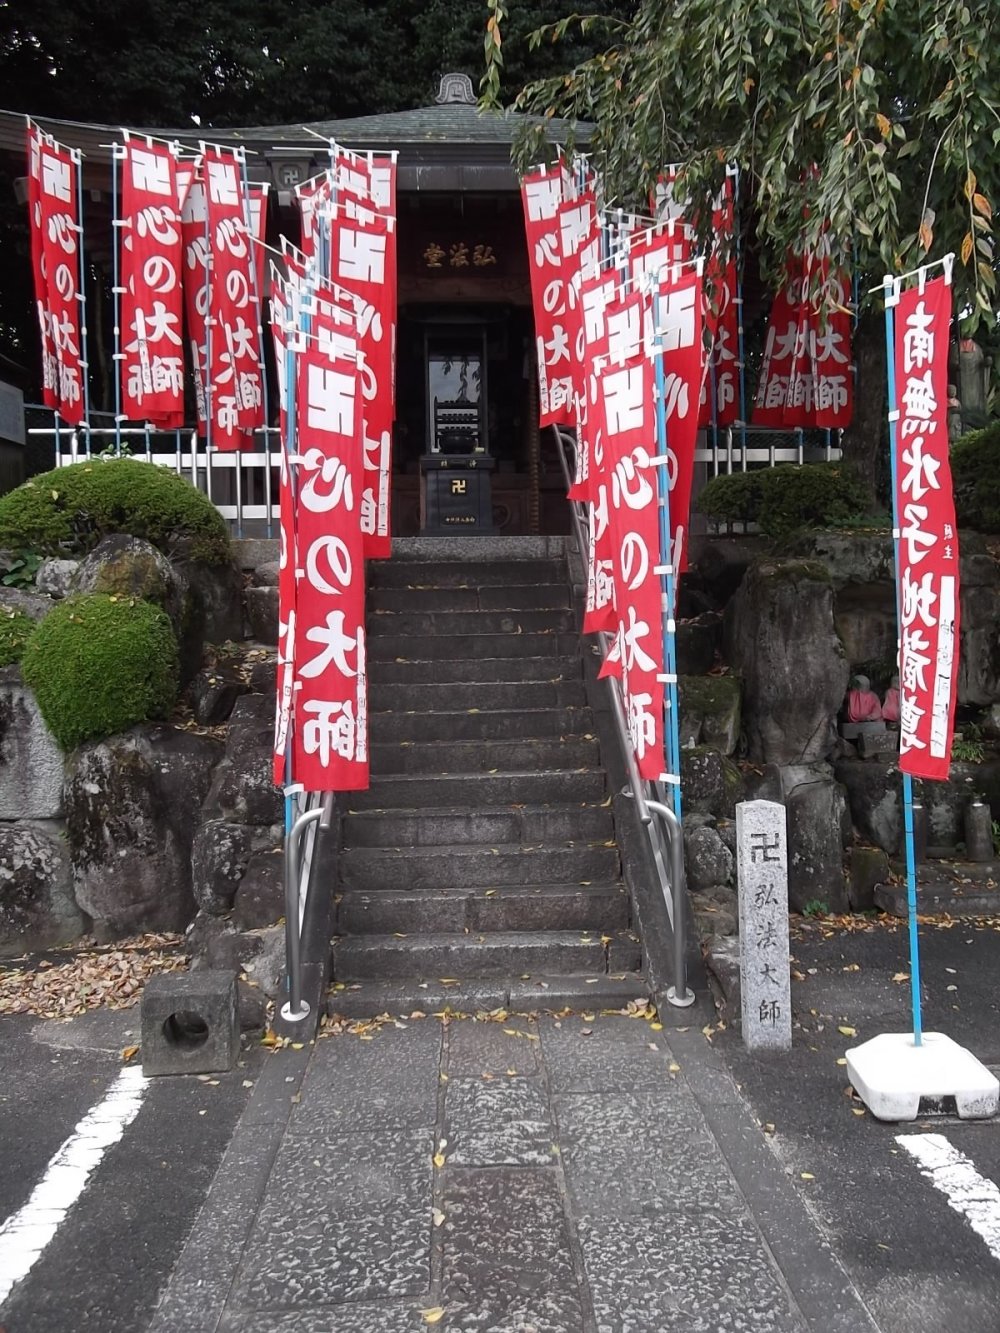 The steps to the main shrine